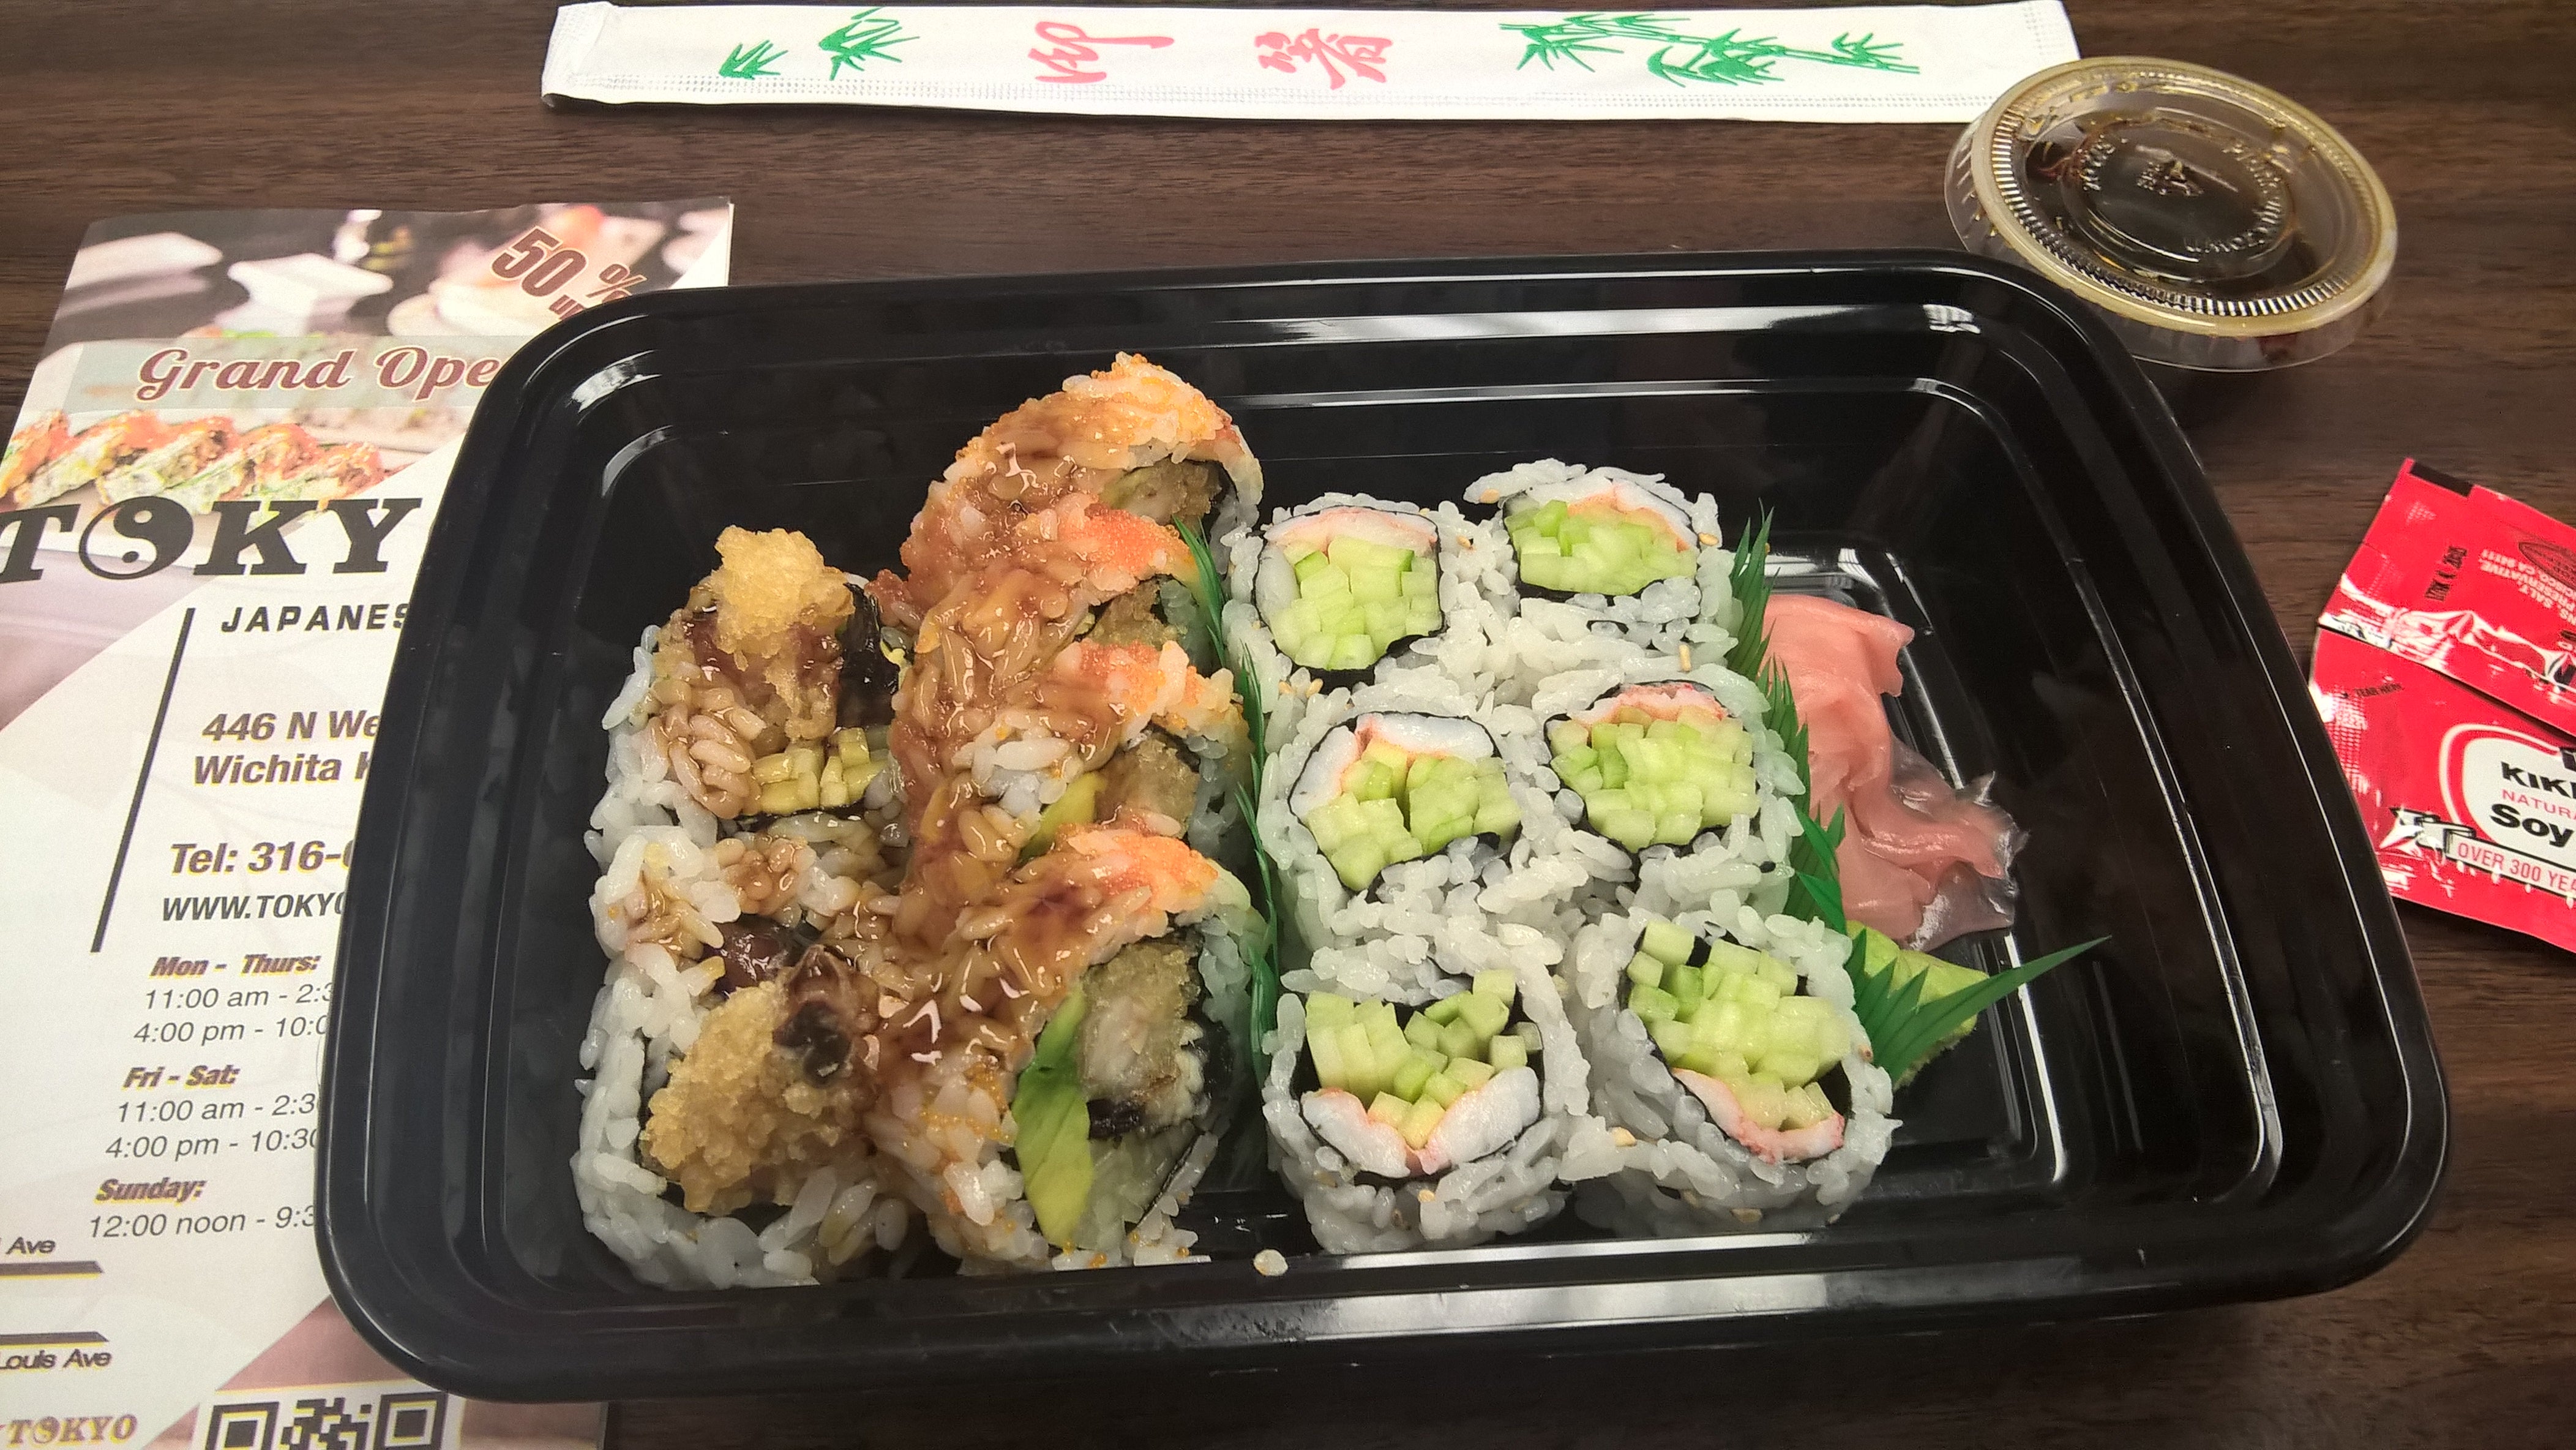 Tokyo Japanese Restaurant, Wichita, KS 67203, Online Order, Take Out